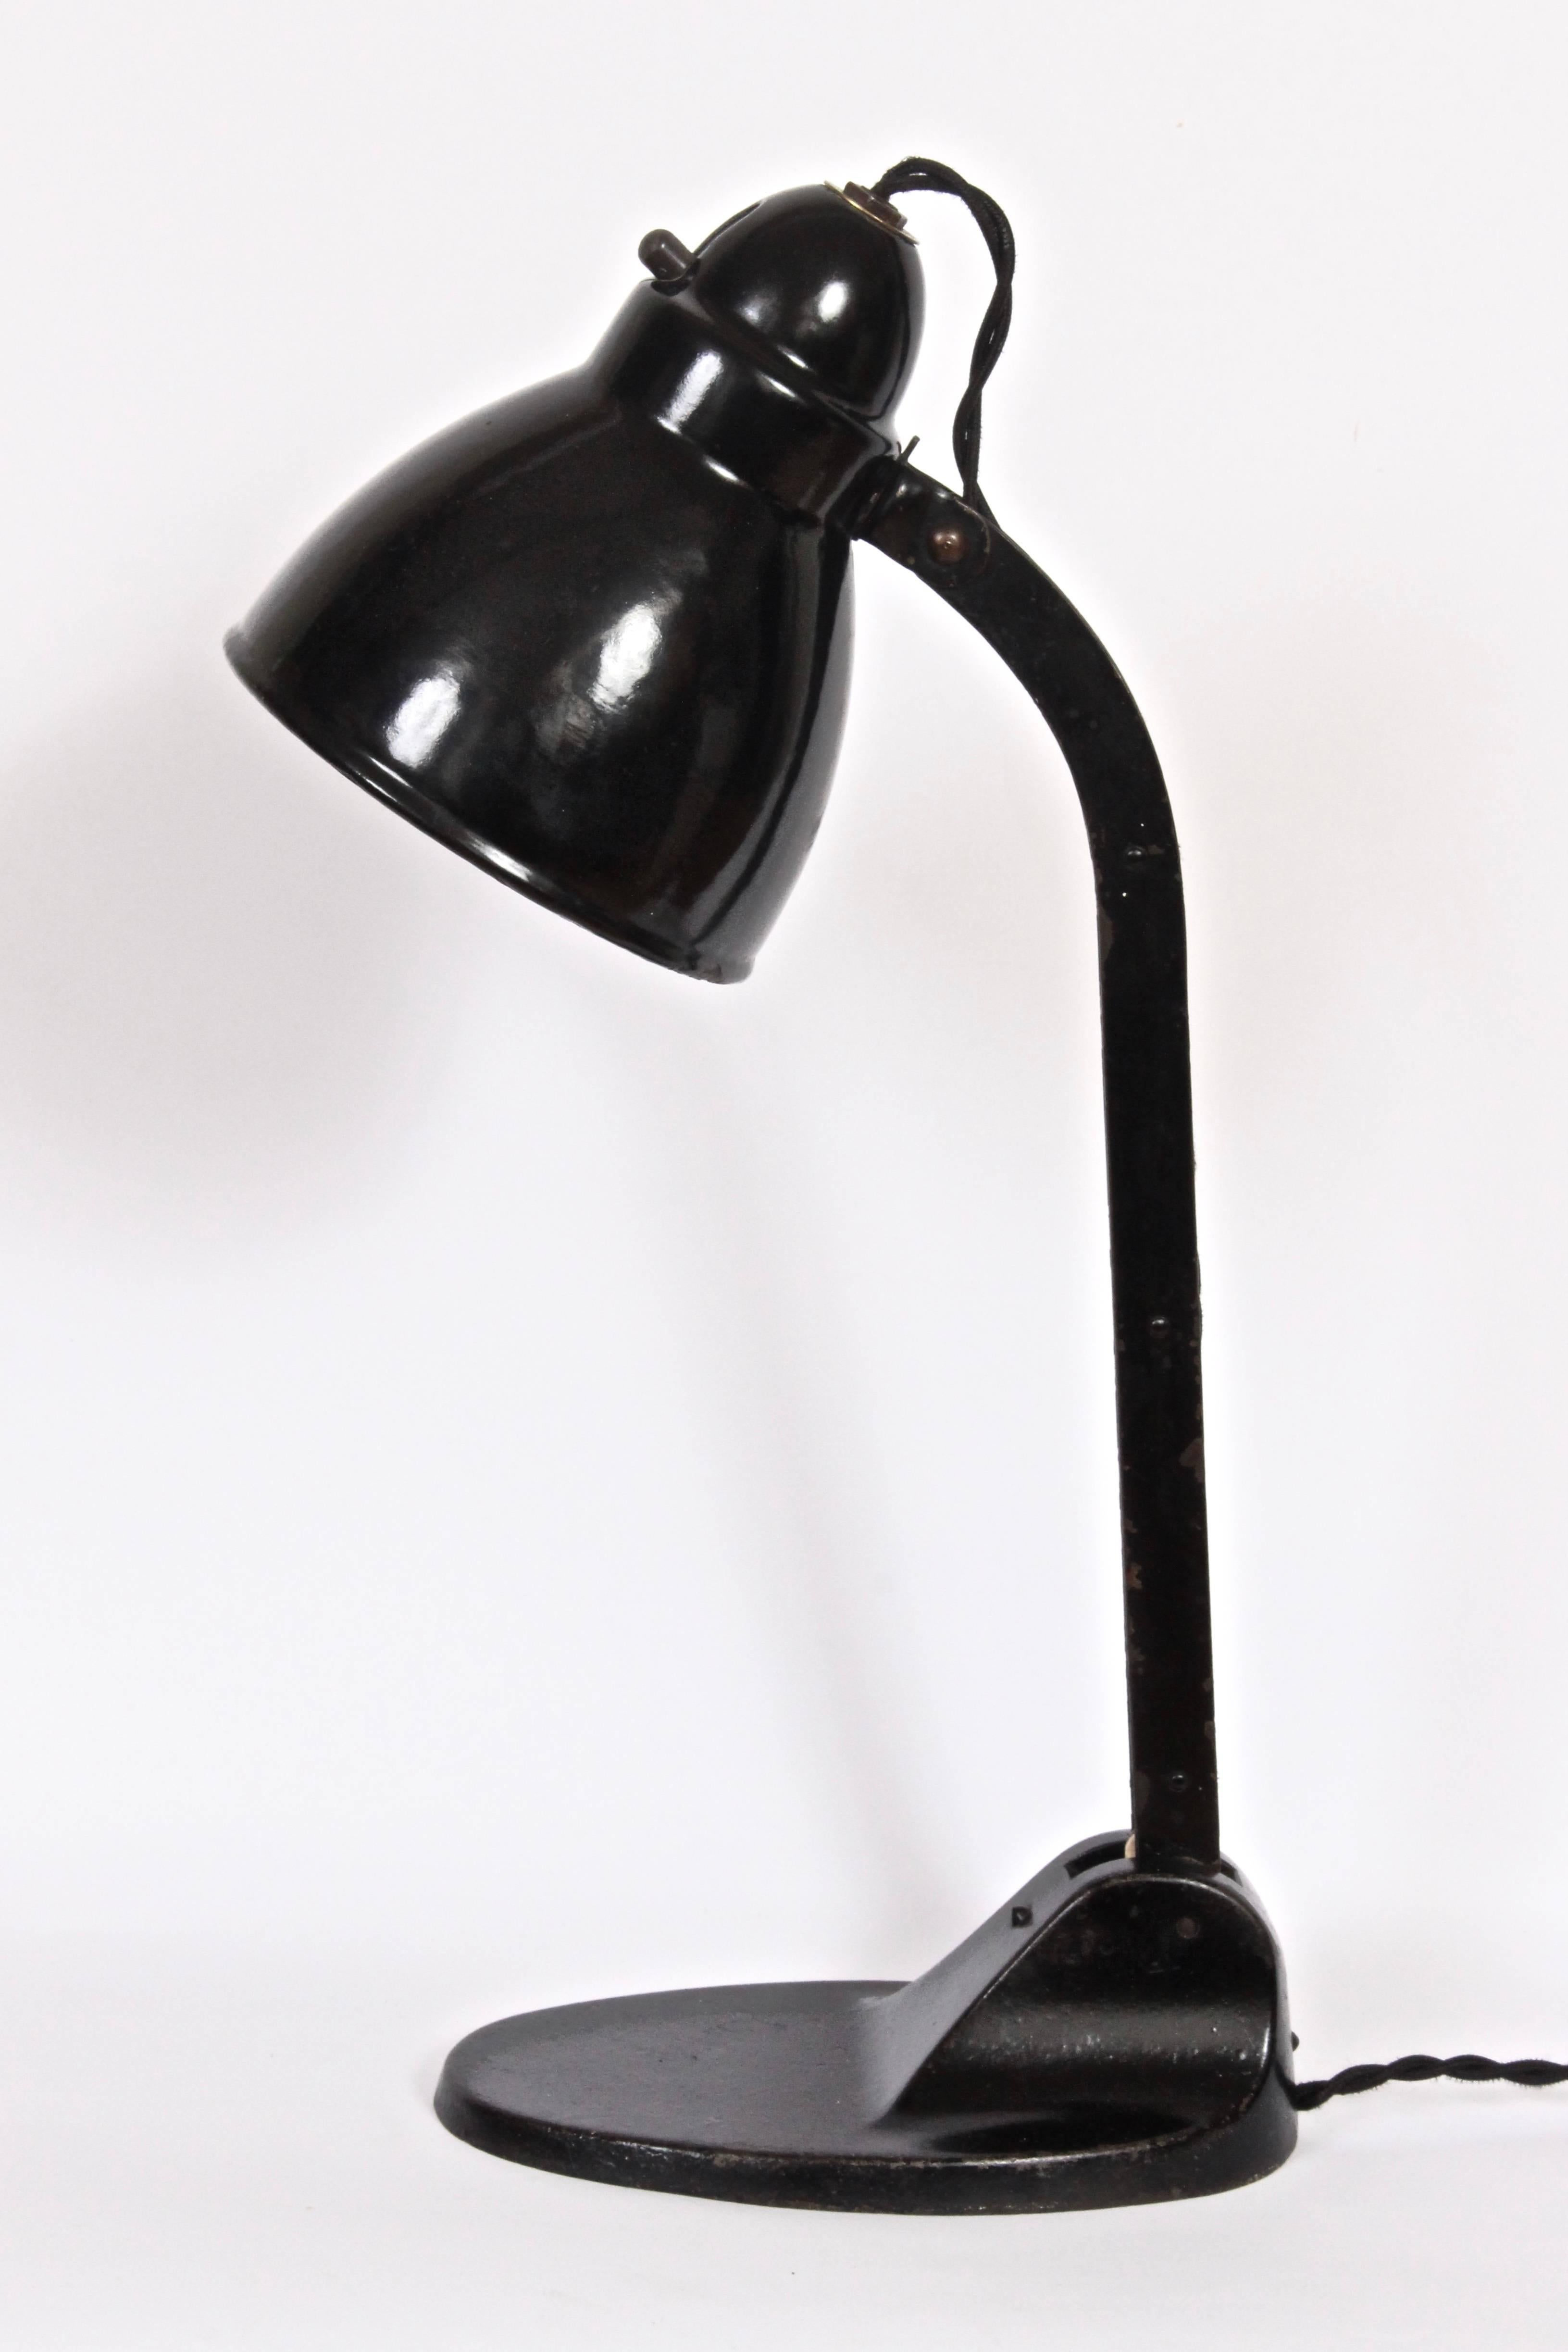 J.J. Pieter Oud Style Black Architects Desk Lamp by Viktoria Lampe, c. 1930 For Sale 1